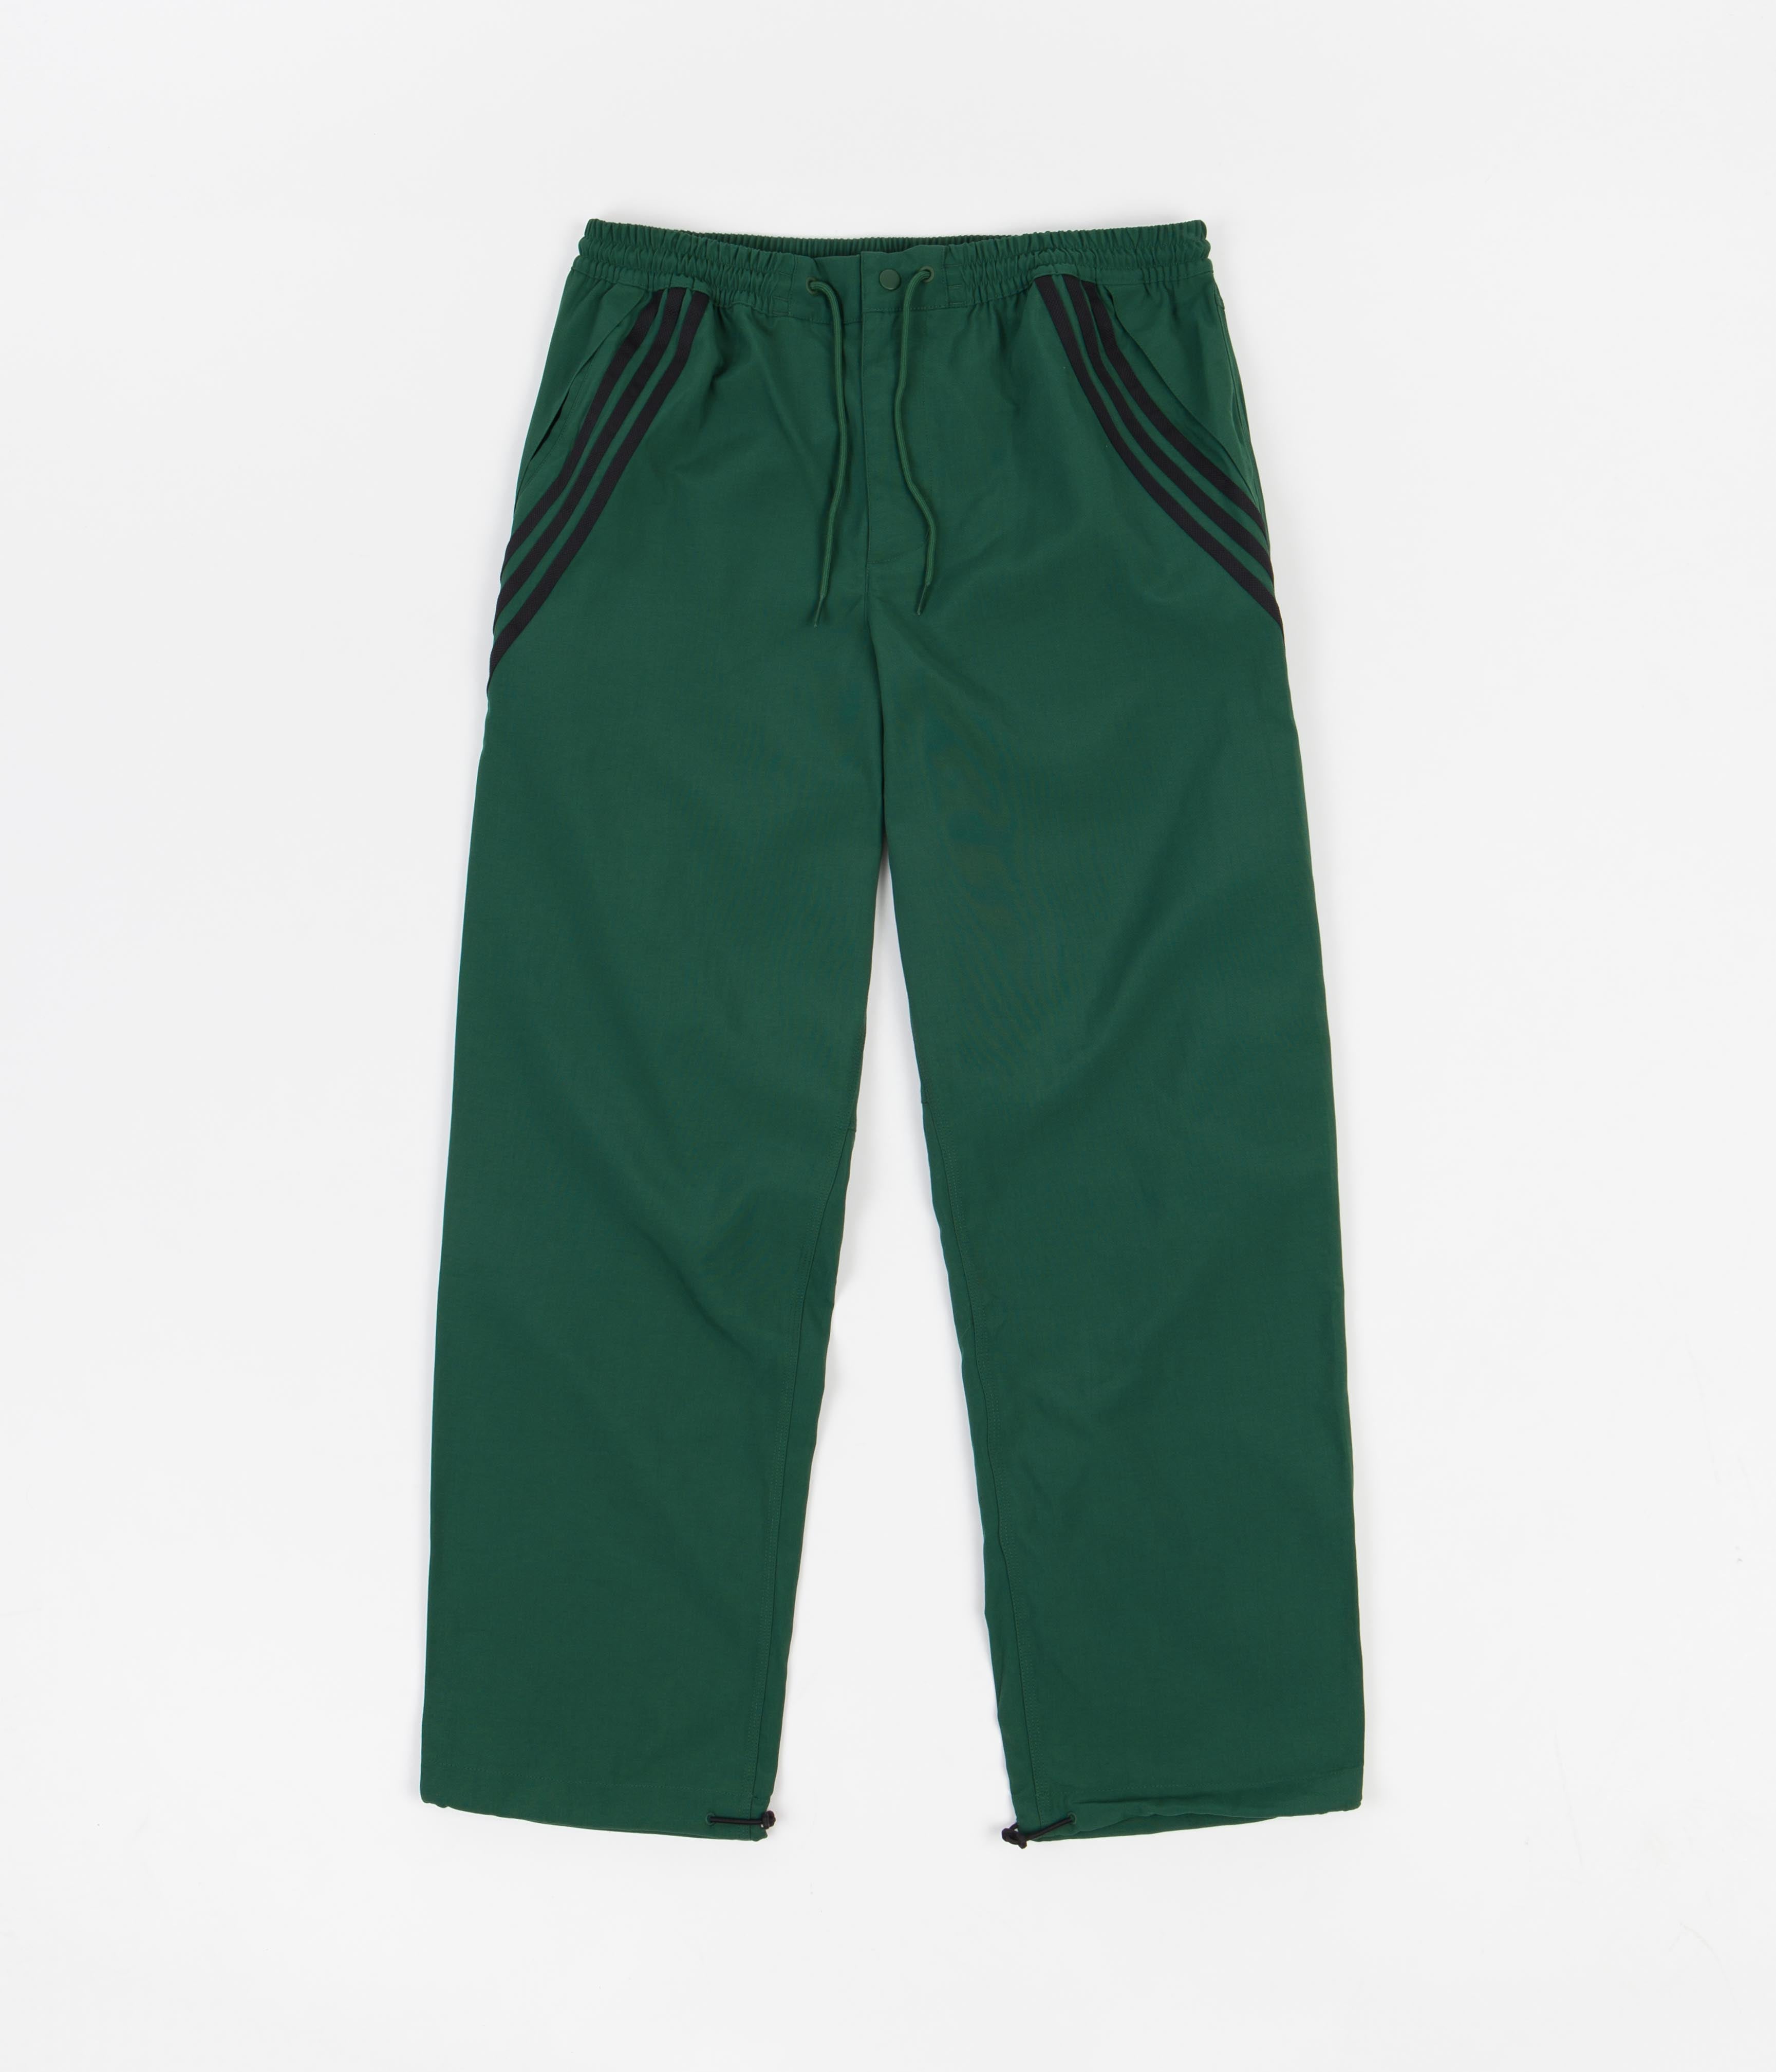 Collegiate Green Black - Adidas Pants | Adidas x yeezy foam runner sulfur yellow men us 8-13 gv6775 - WpadcShops